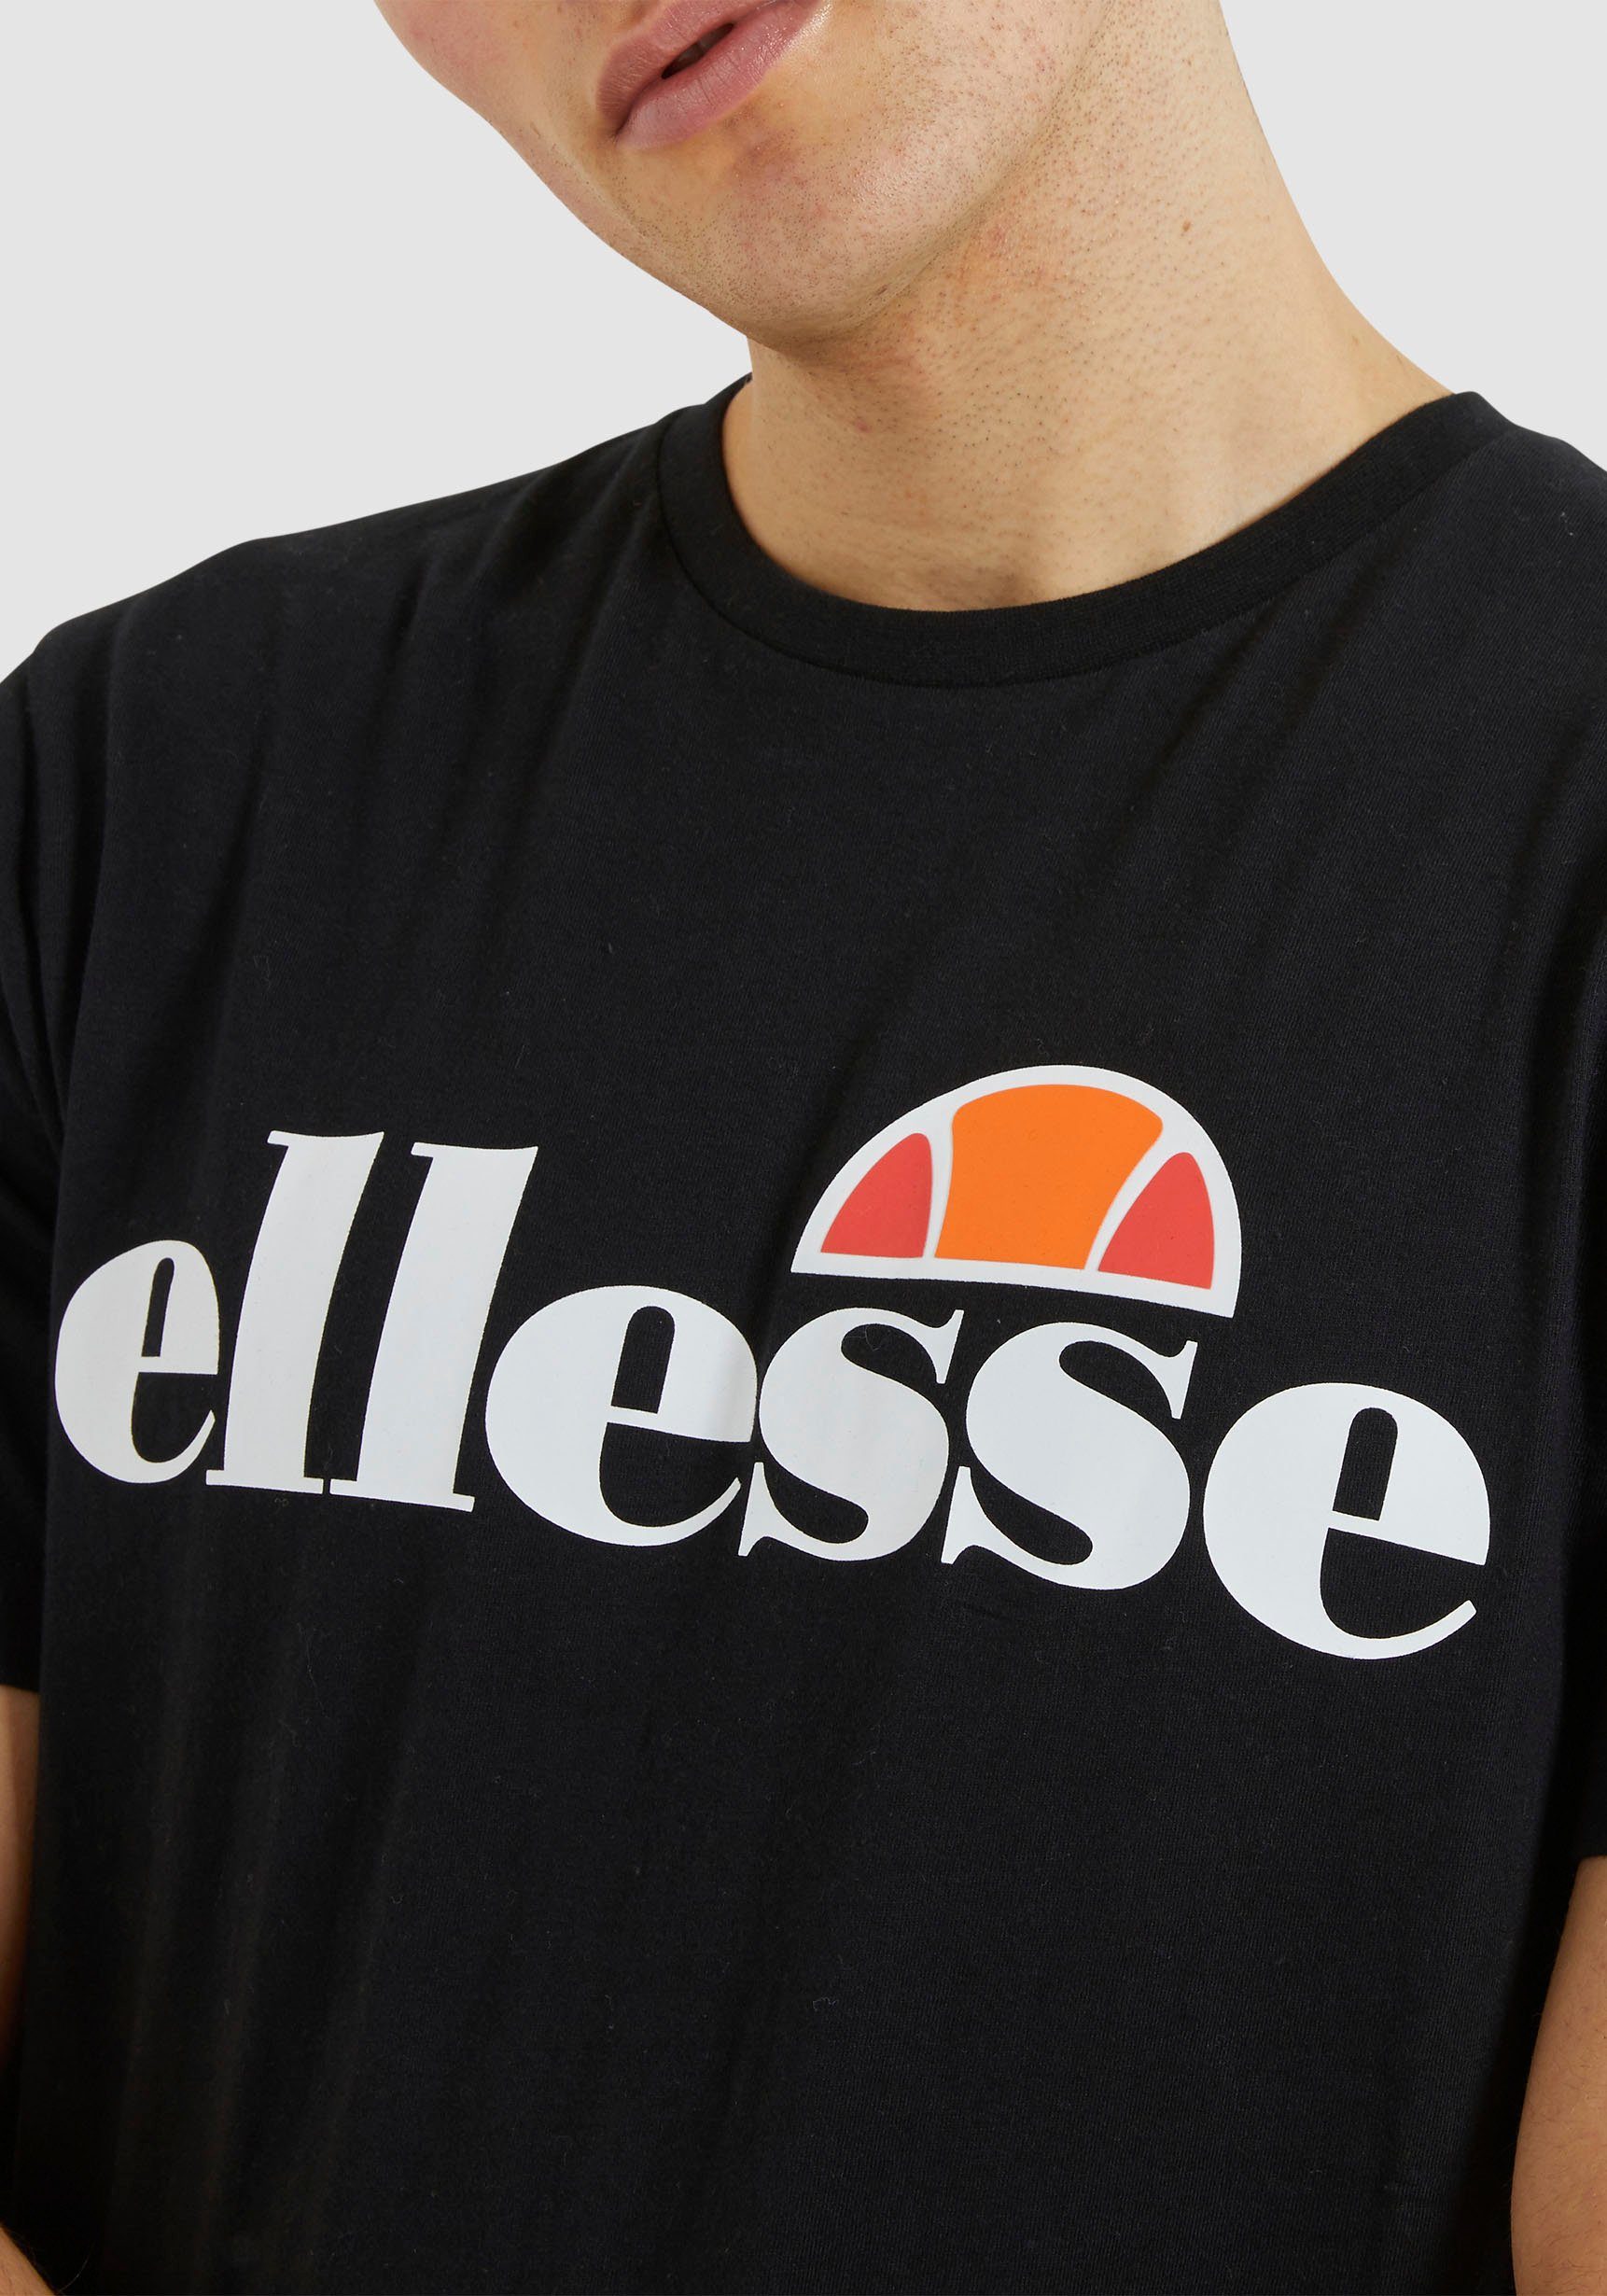 Ellesse T-Shirt TEE SL PRADO schwarz